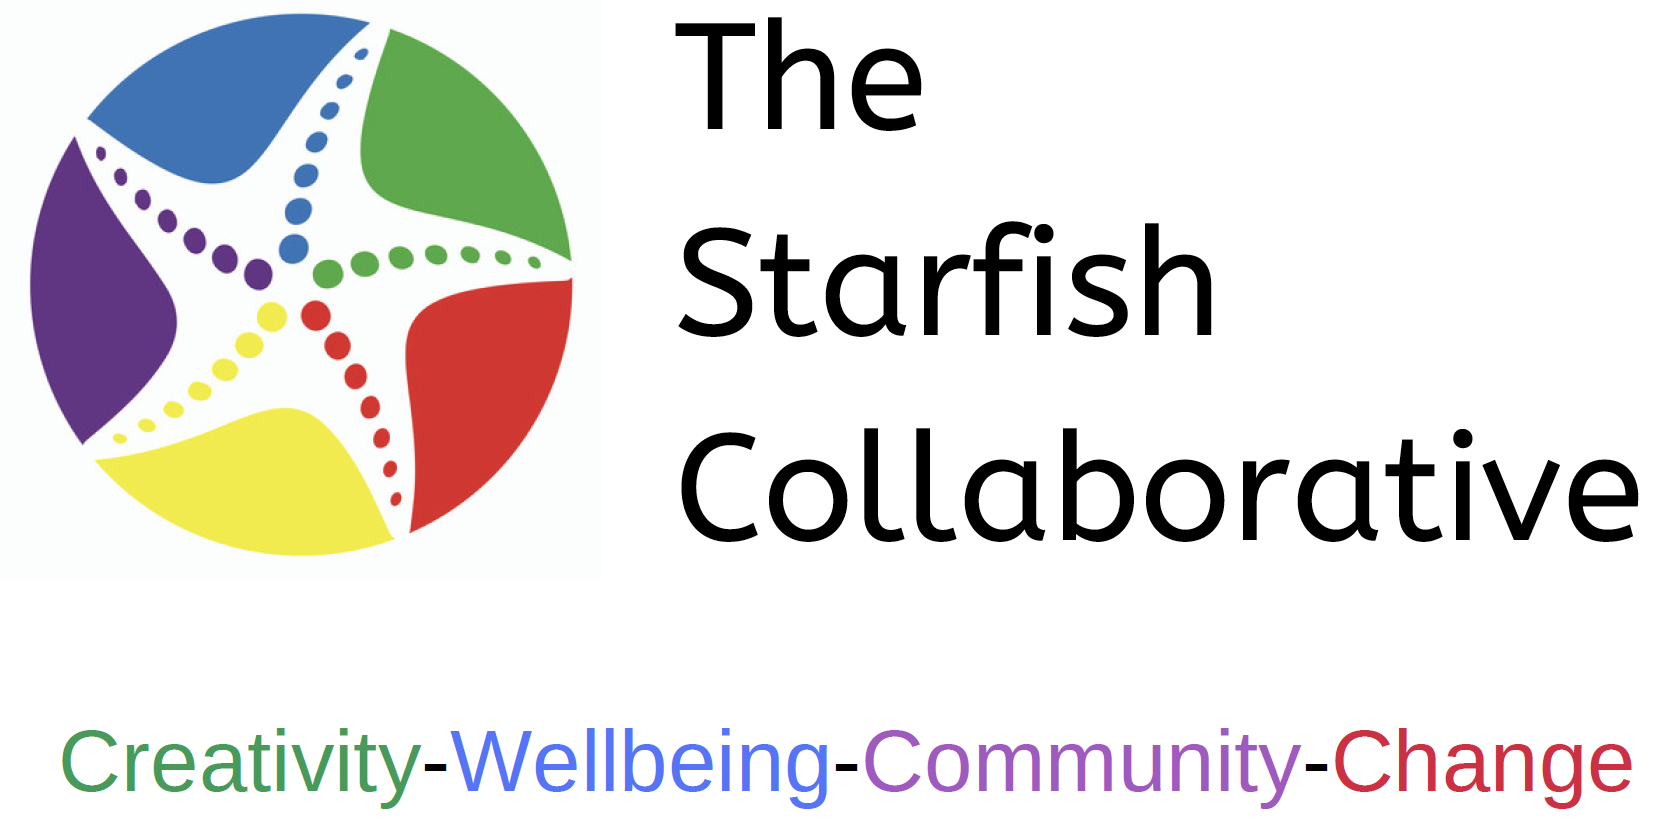 The Starfish Collaborative